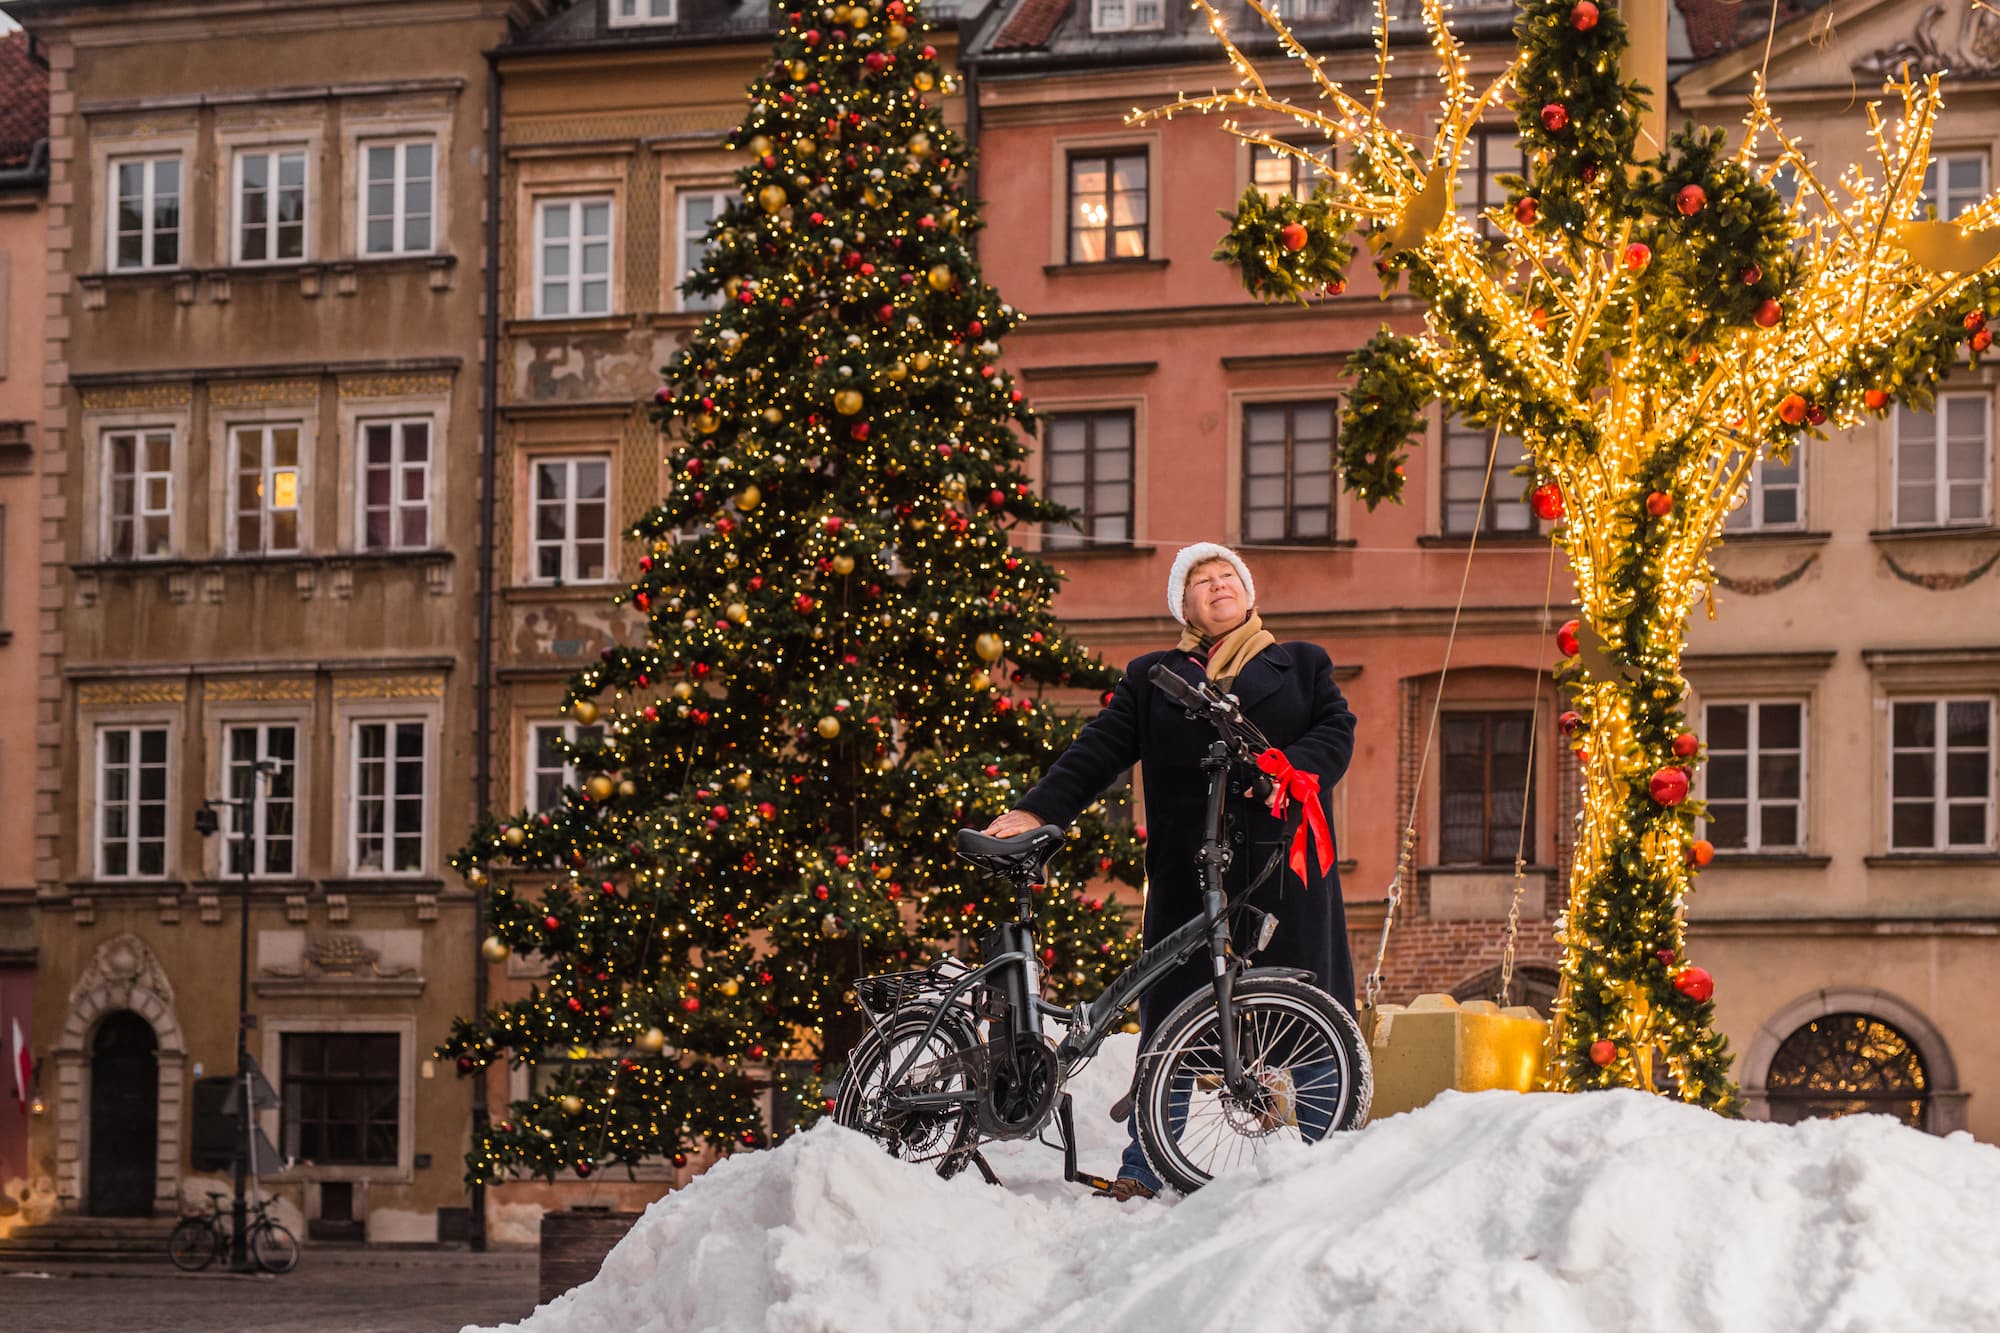 The Perfect Christmas Present: JOBOBIKE E-Bike For Whole Family!